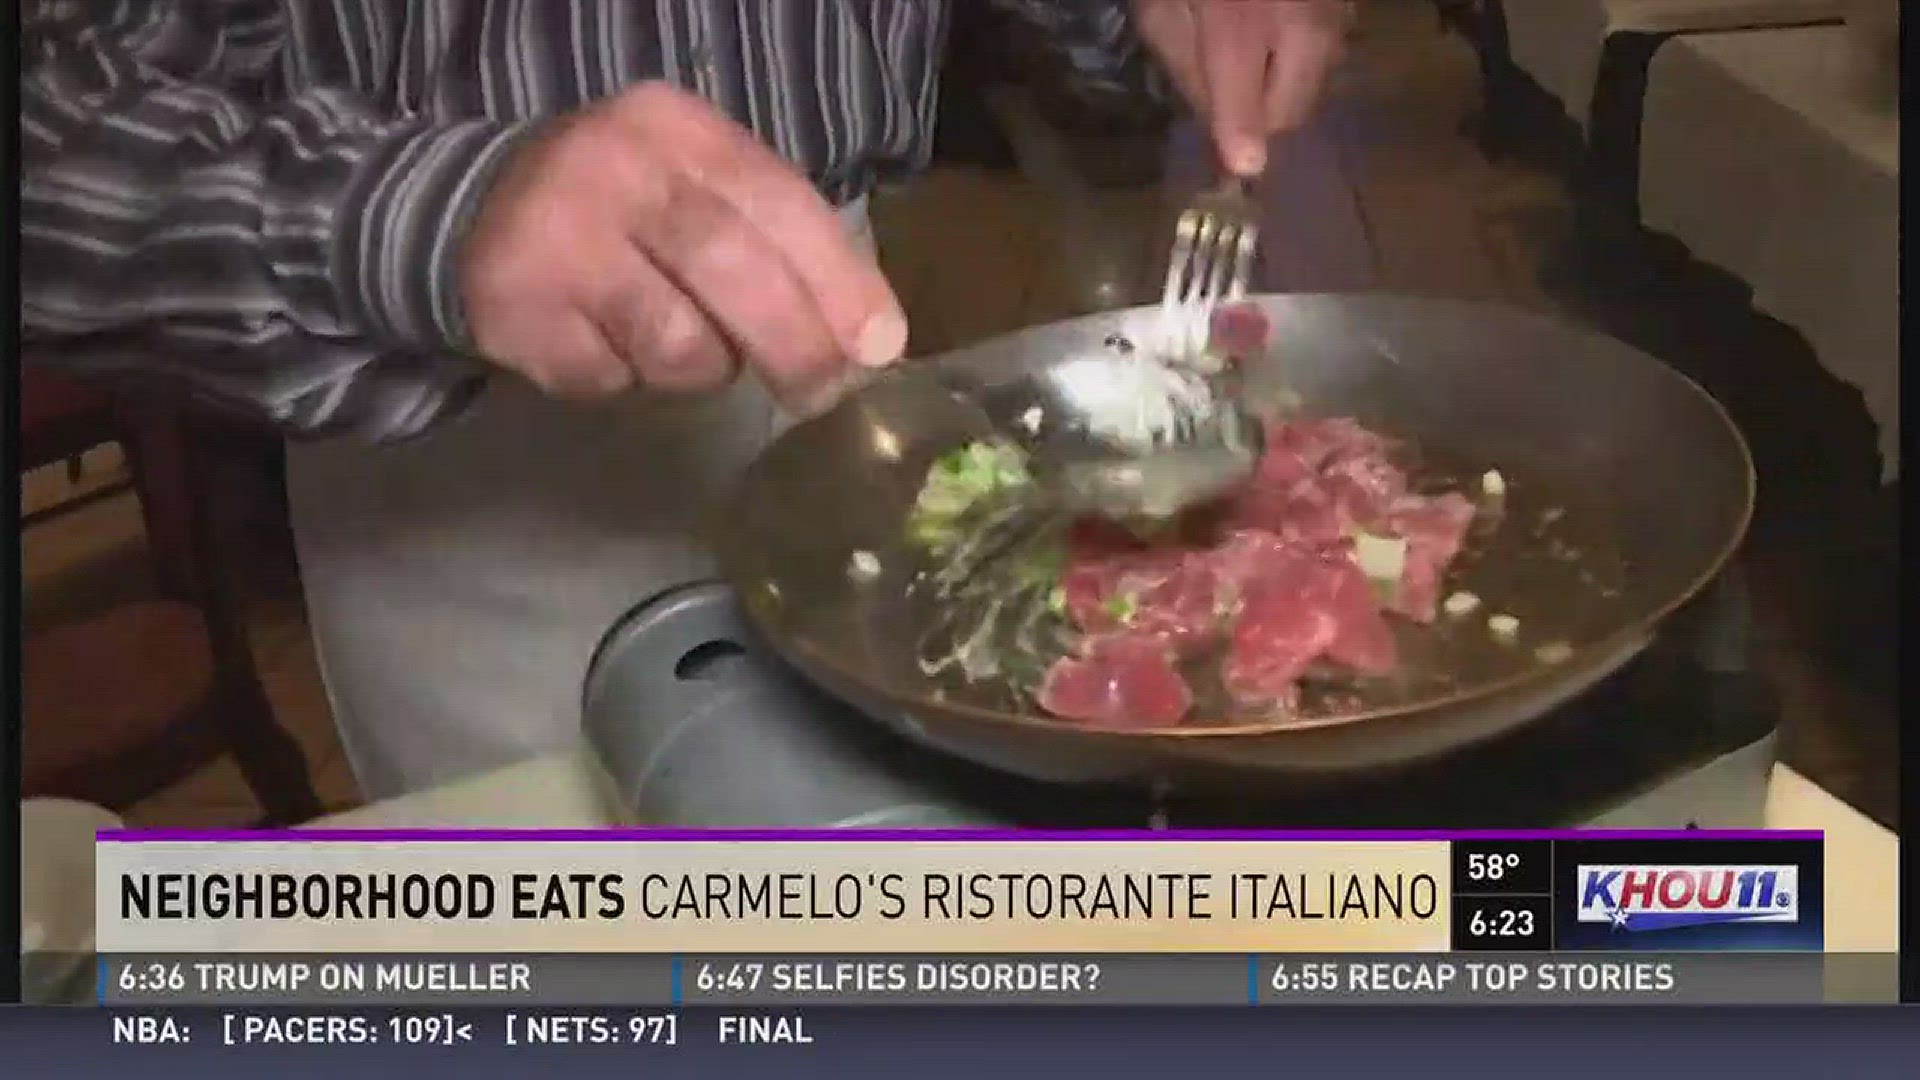 In Monday morning's Neighborhood Eats, we featured Carmelo's Ristorante Italiano.